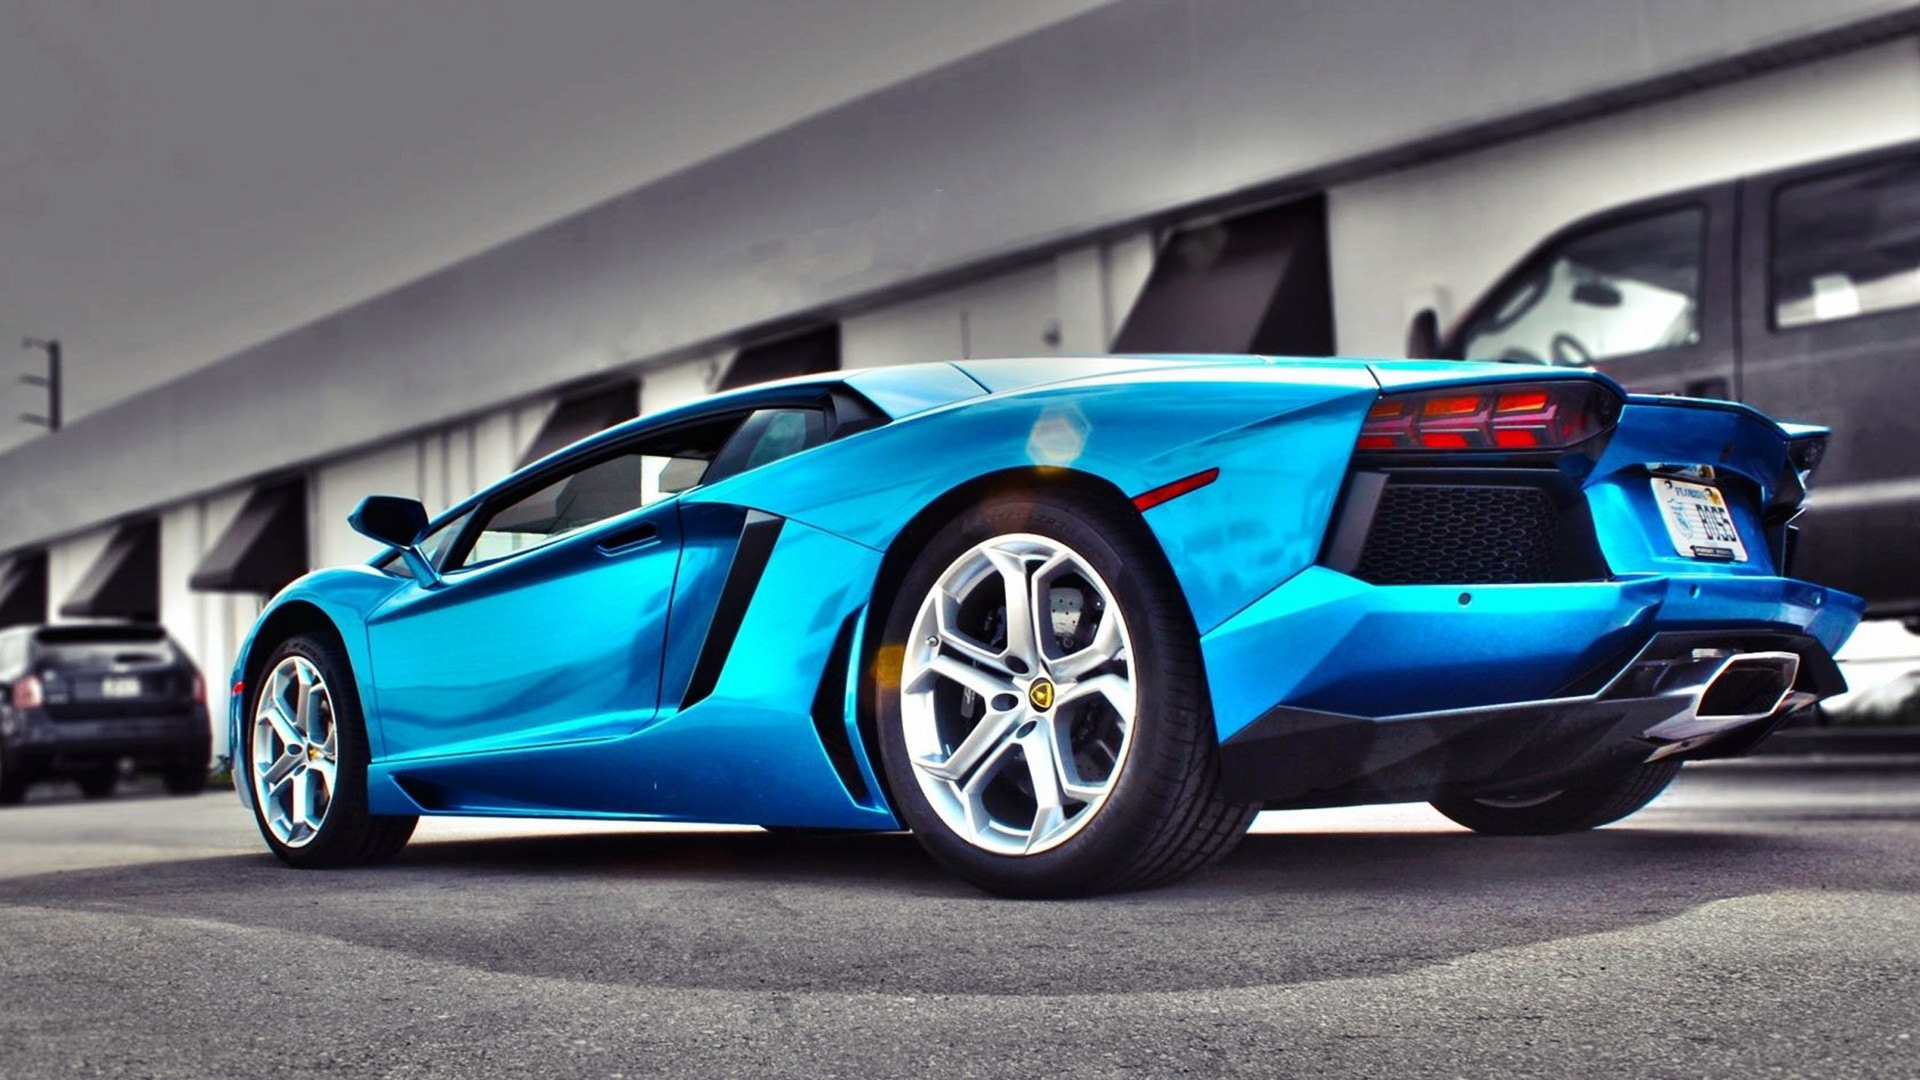 Free Download Lamborghini Aventador Blu Hd Wallpaper Background Images